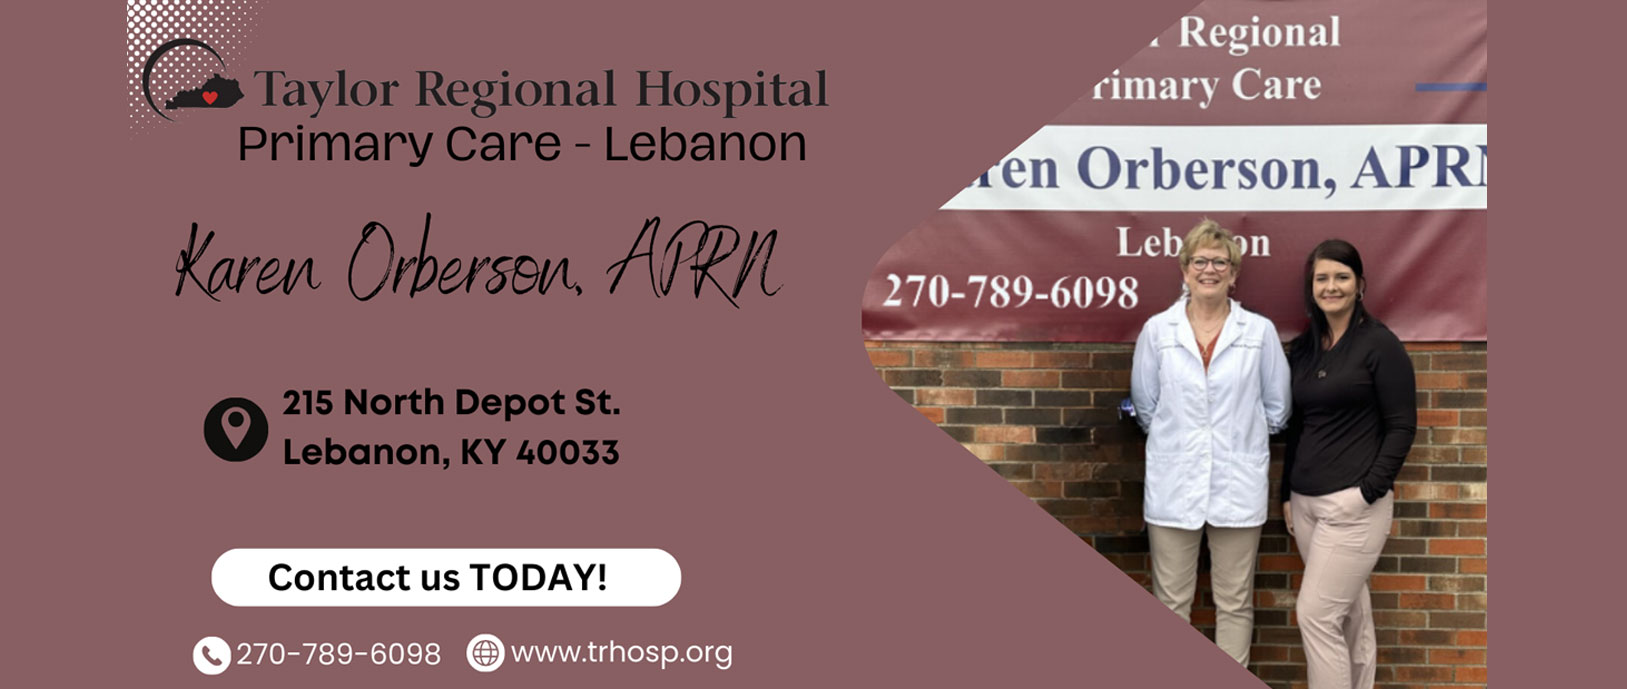 Taylor Regional Hospital Primary Care - Lebanon

Karen Orberson, APRN

215 North Depot St. Lebanon, KY 40033